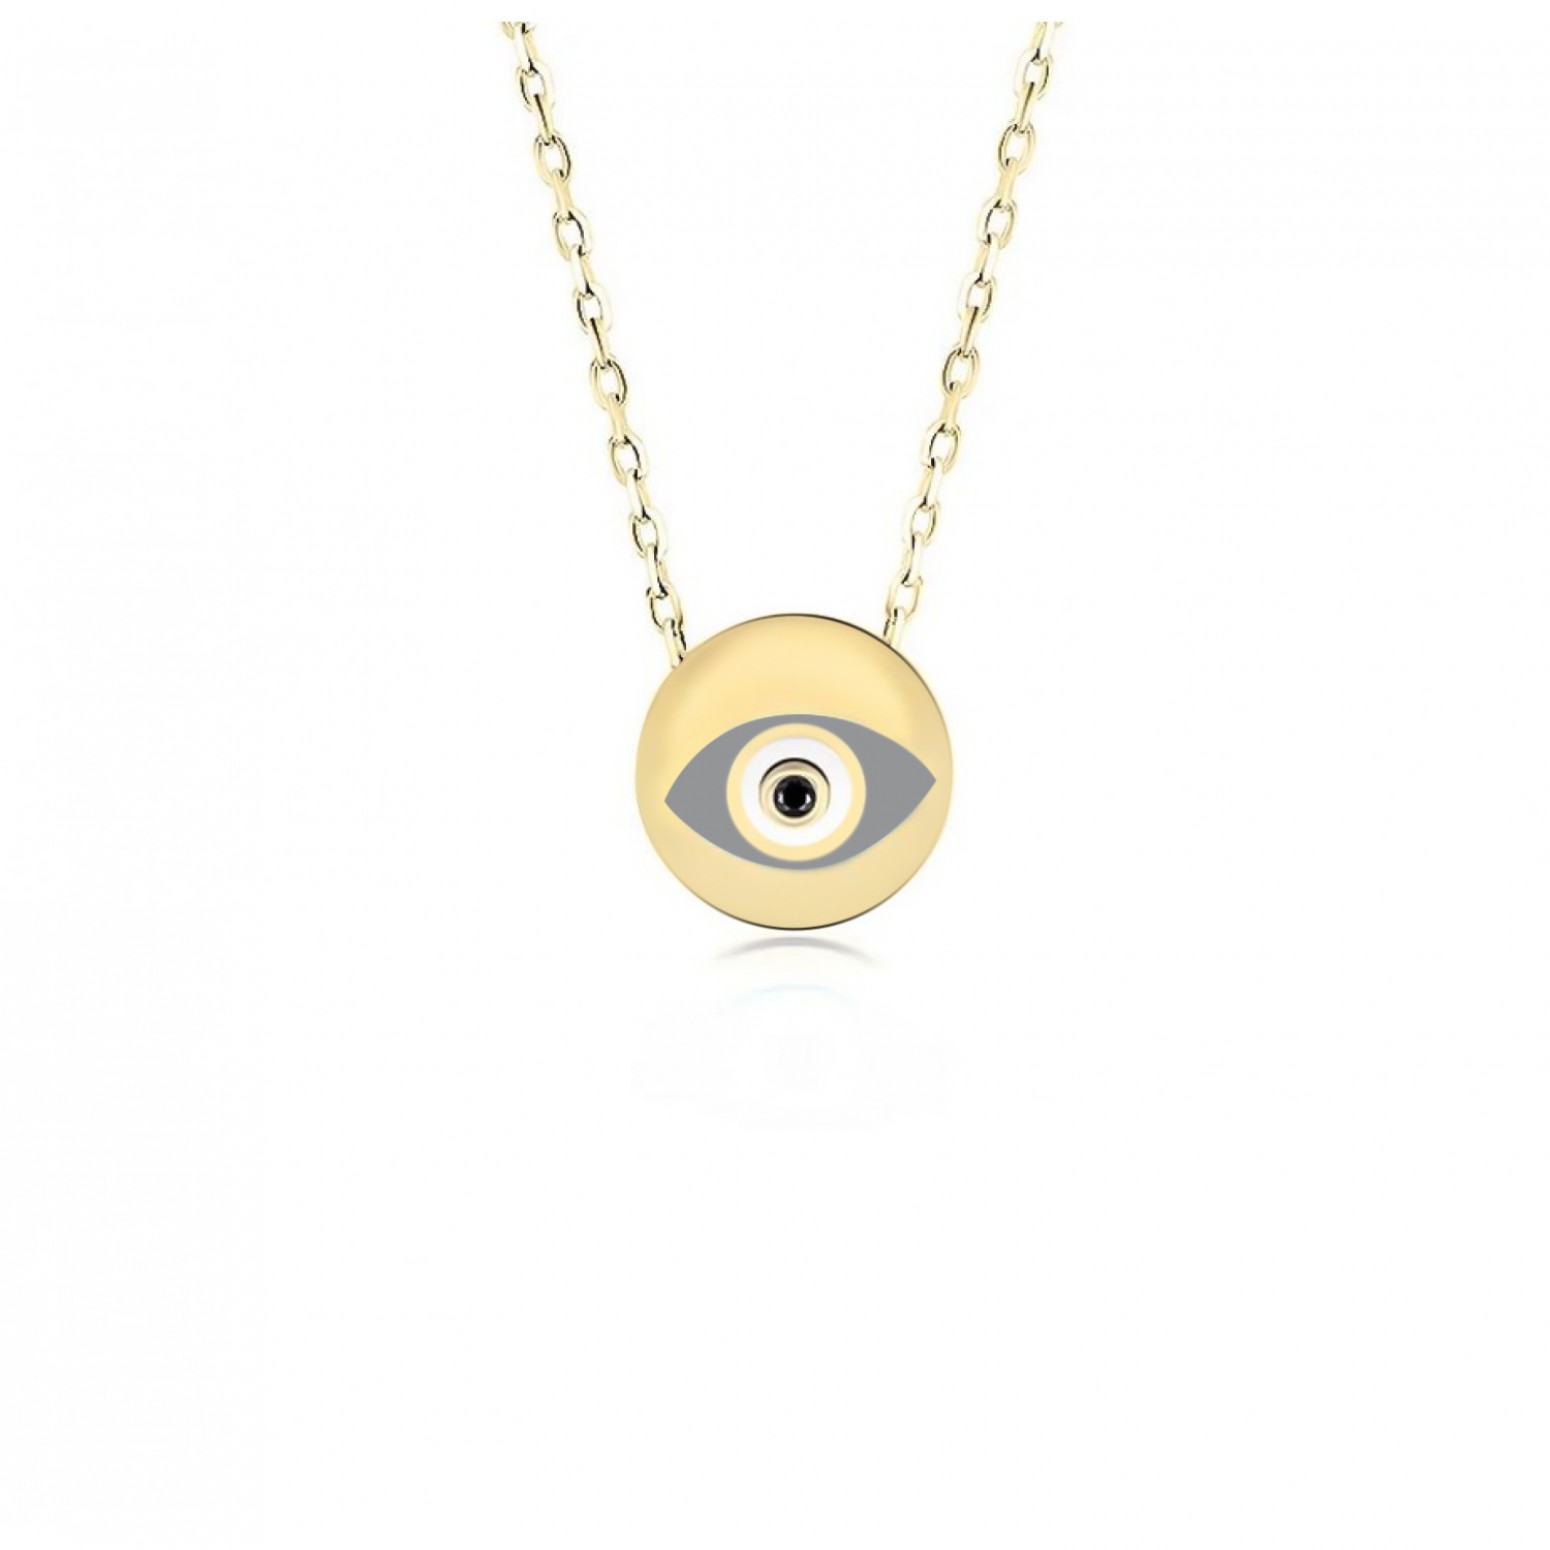 Eye necklace, Κ9 gold with zircon and enamel, ko5858 NECKLACES Κοσμηματα - chrilia.gr